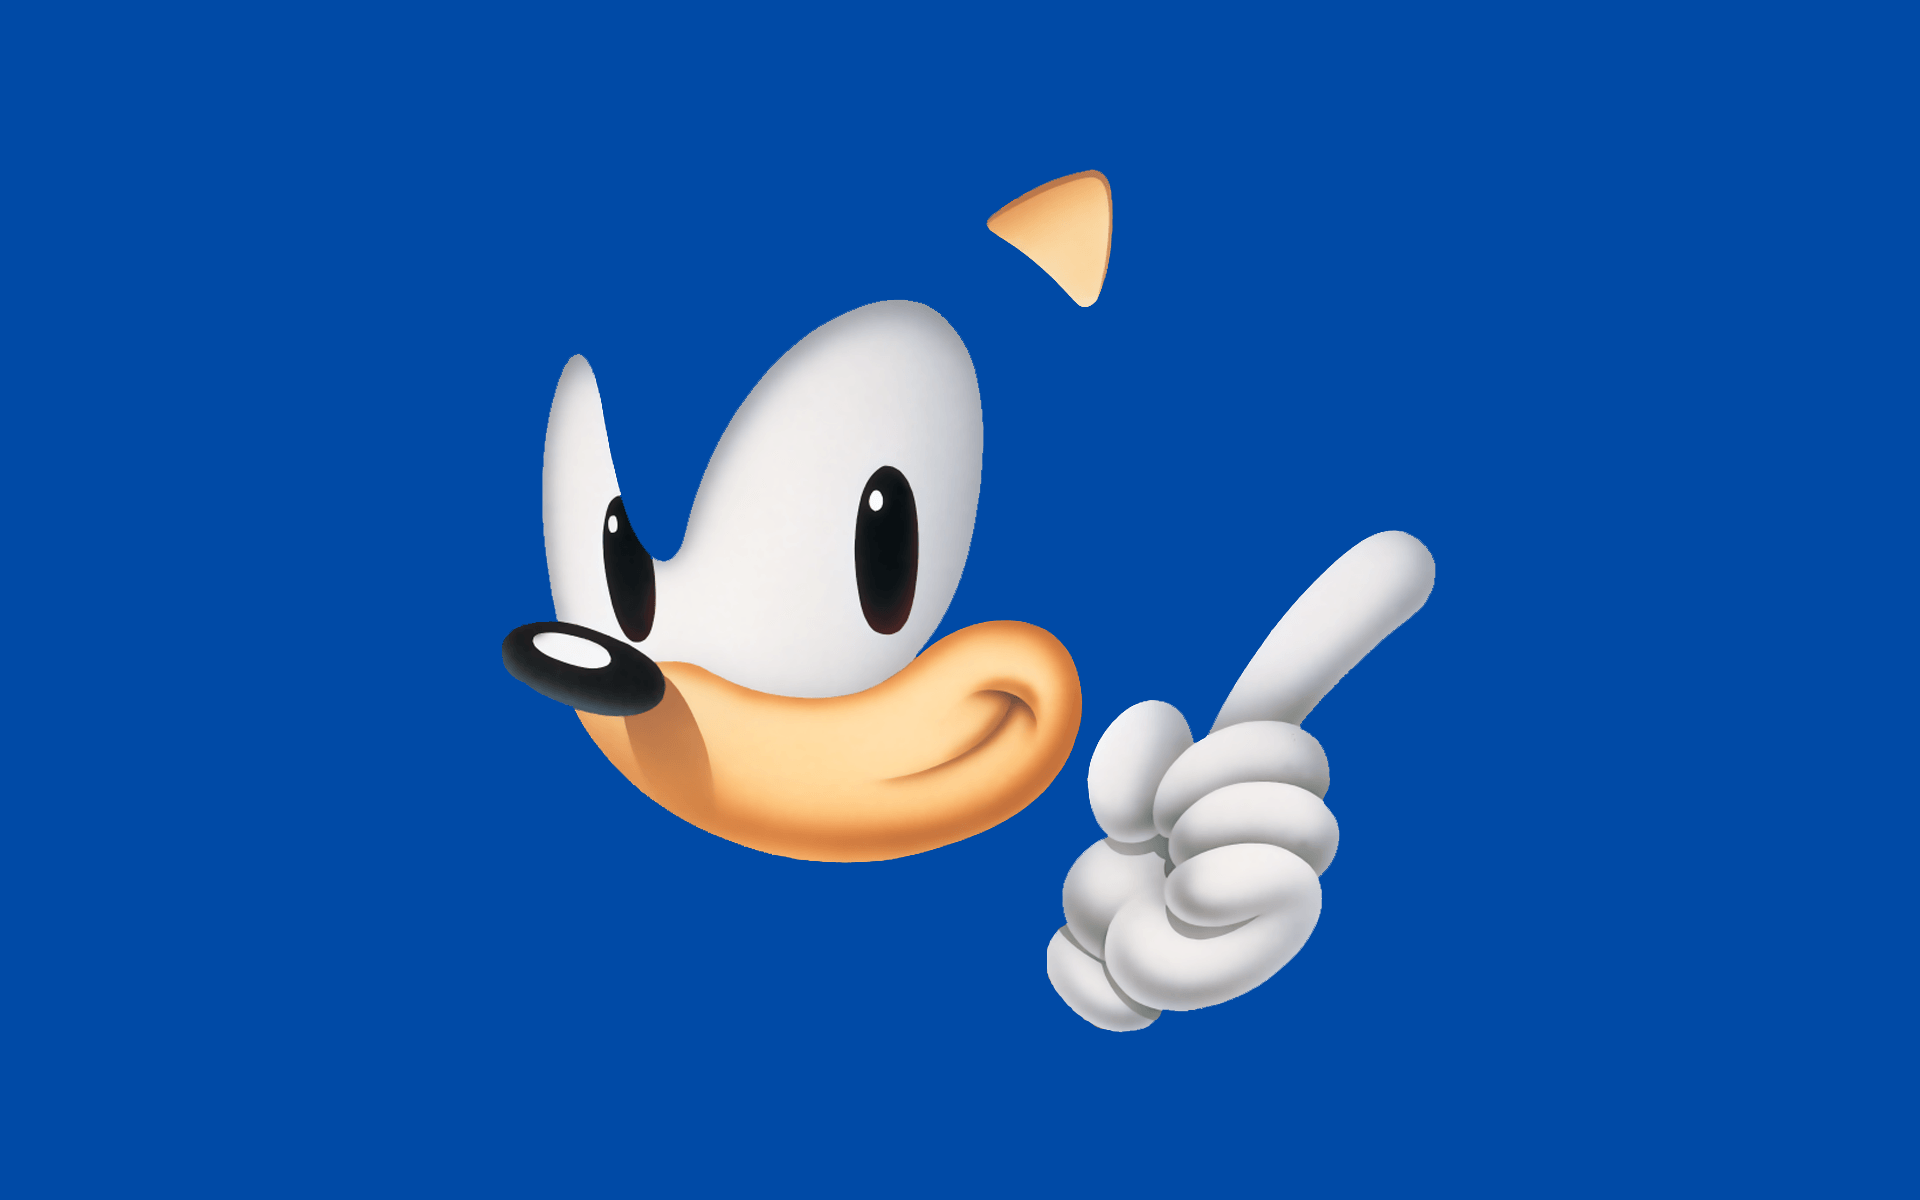 Sonic the Hedgehog retro games video games wallpaper. Retro games